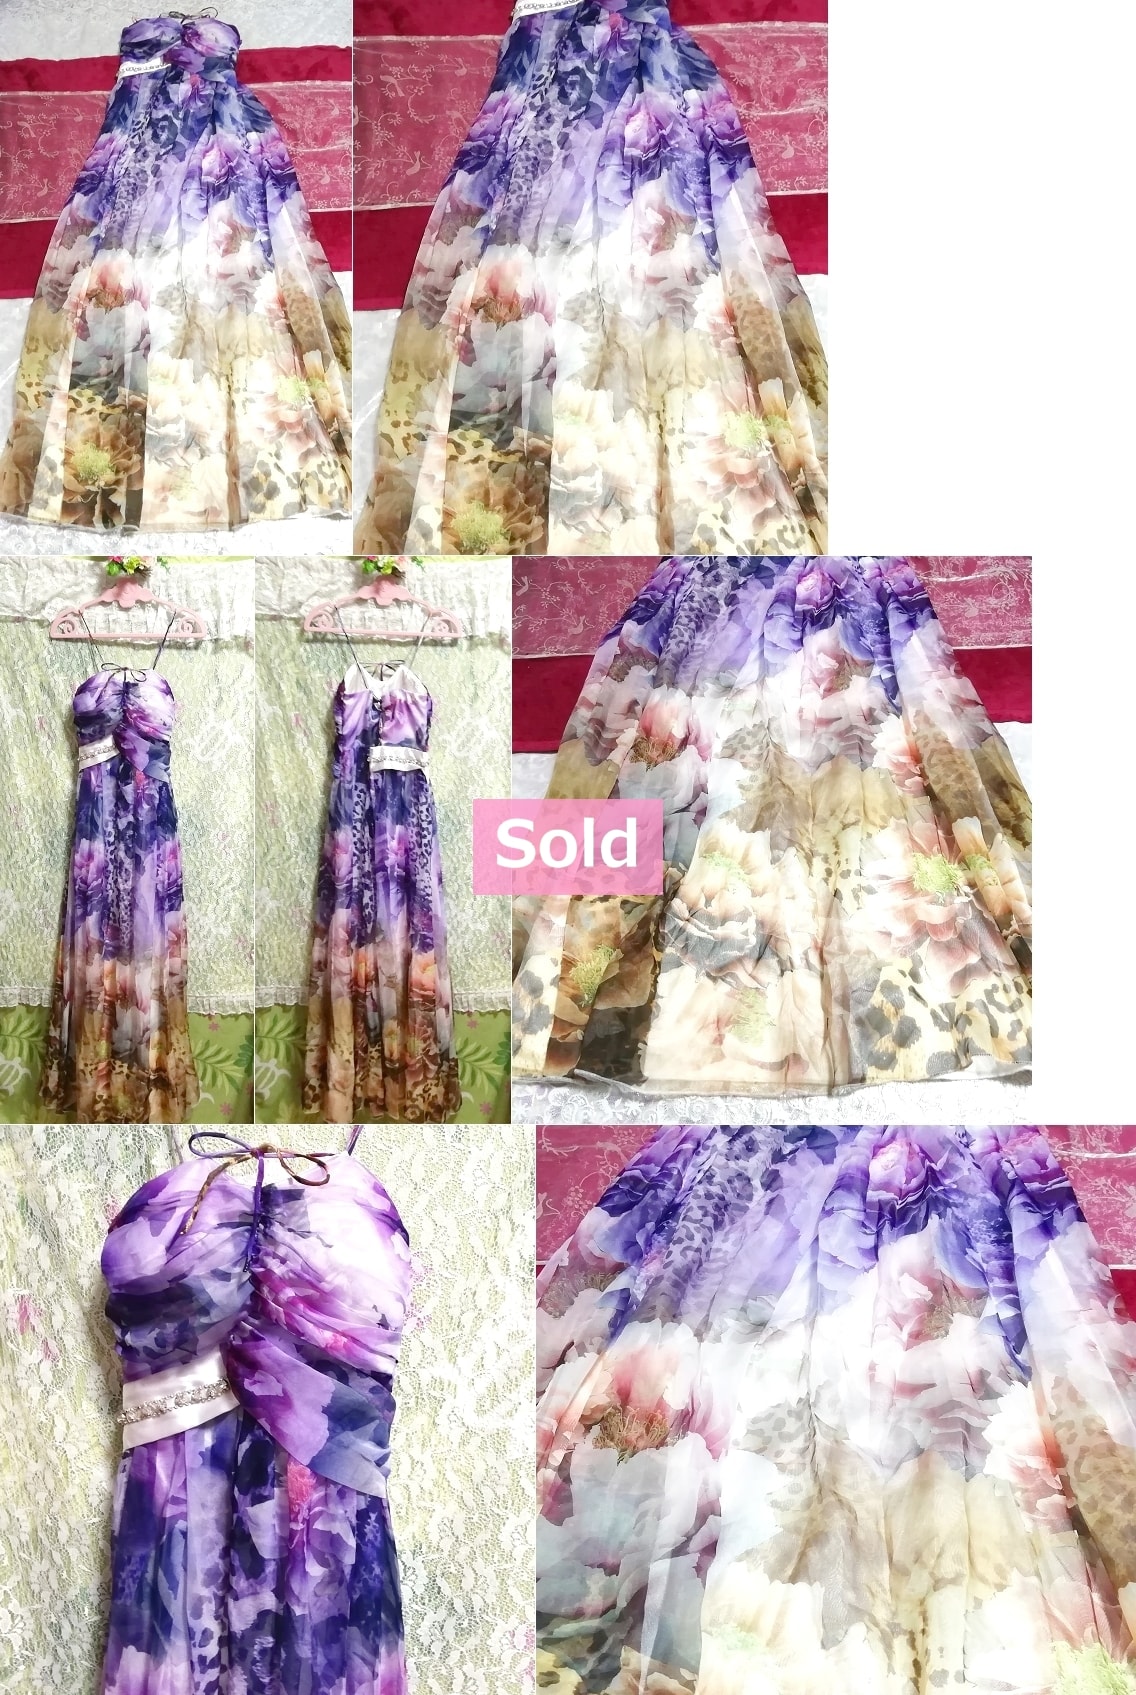 Luxury purple flower pattern chiffon camisole maxi long dress / one piece